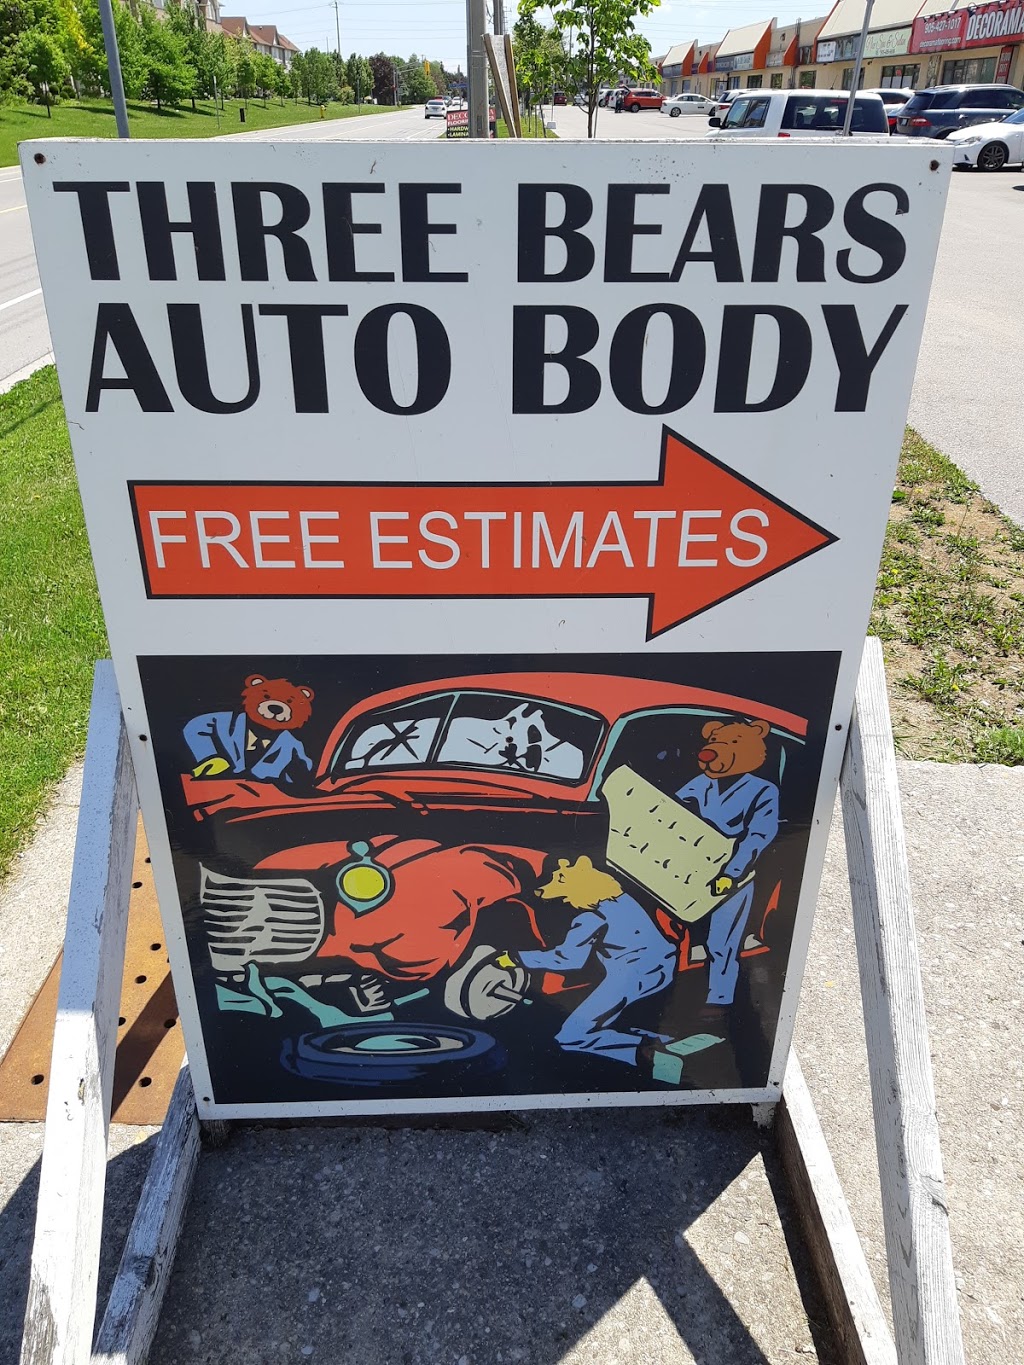 Three Bears Autobody Inc | car repair | 282 Monarch Ave, Ajax, ON L1S 2G6, Canada | 9056192327 OR +1 905-619-2327